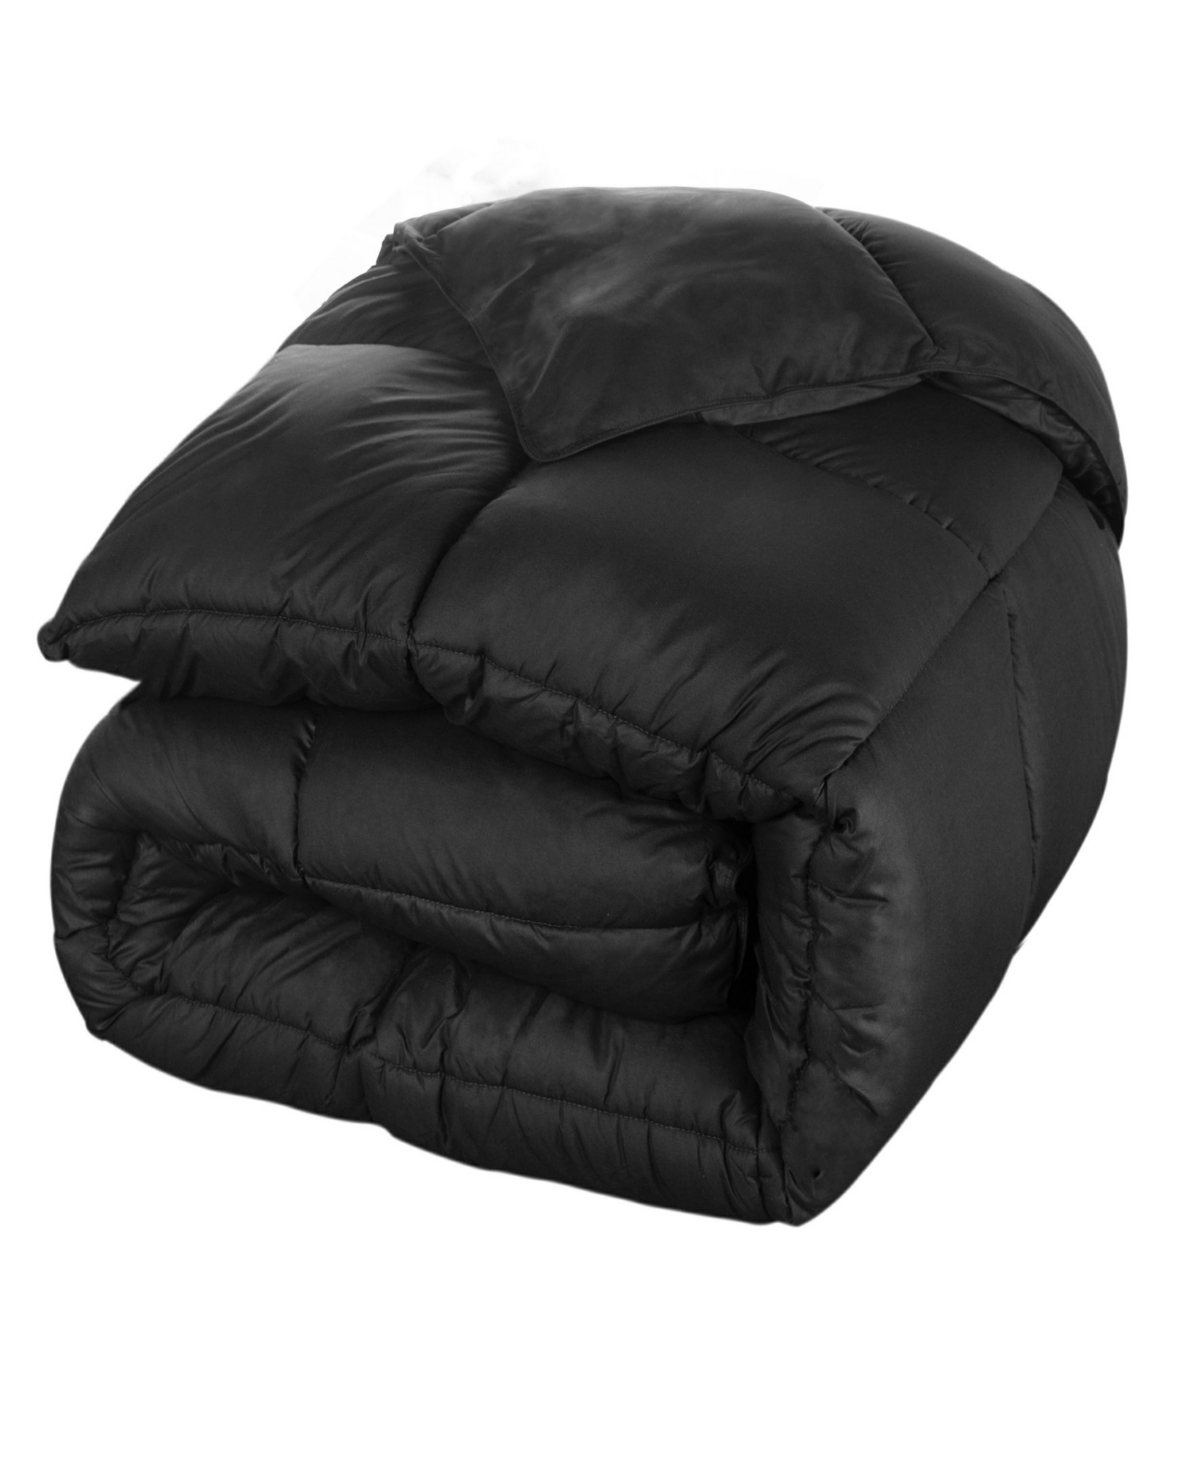 Superior Breathable All Season Down Alternative Comforter, Queen In Black